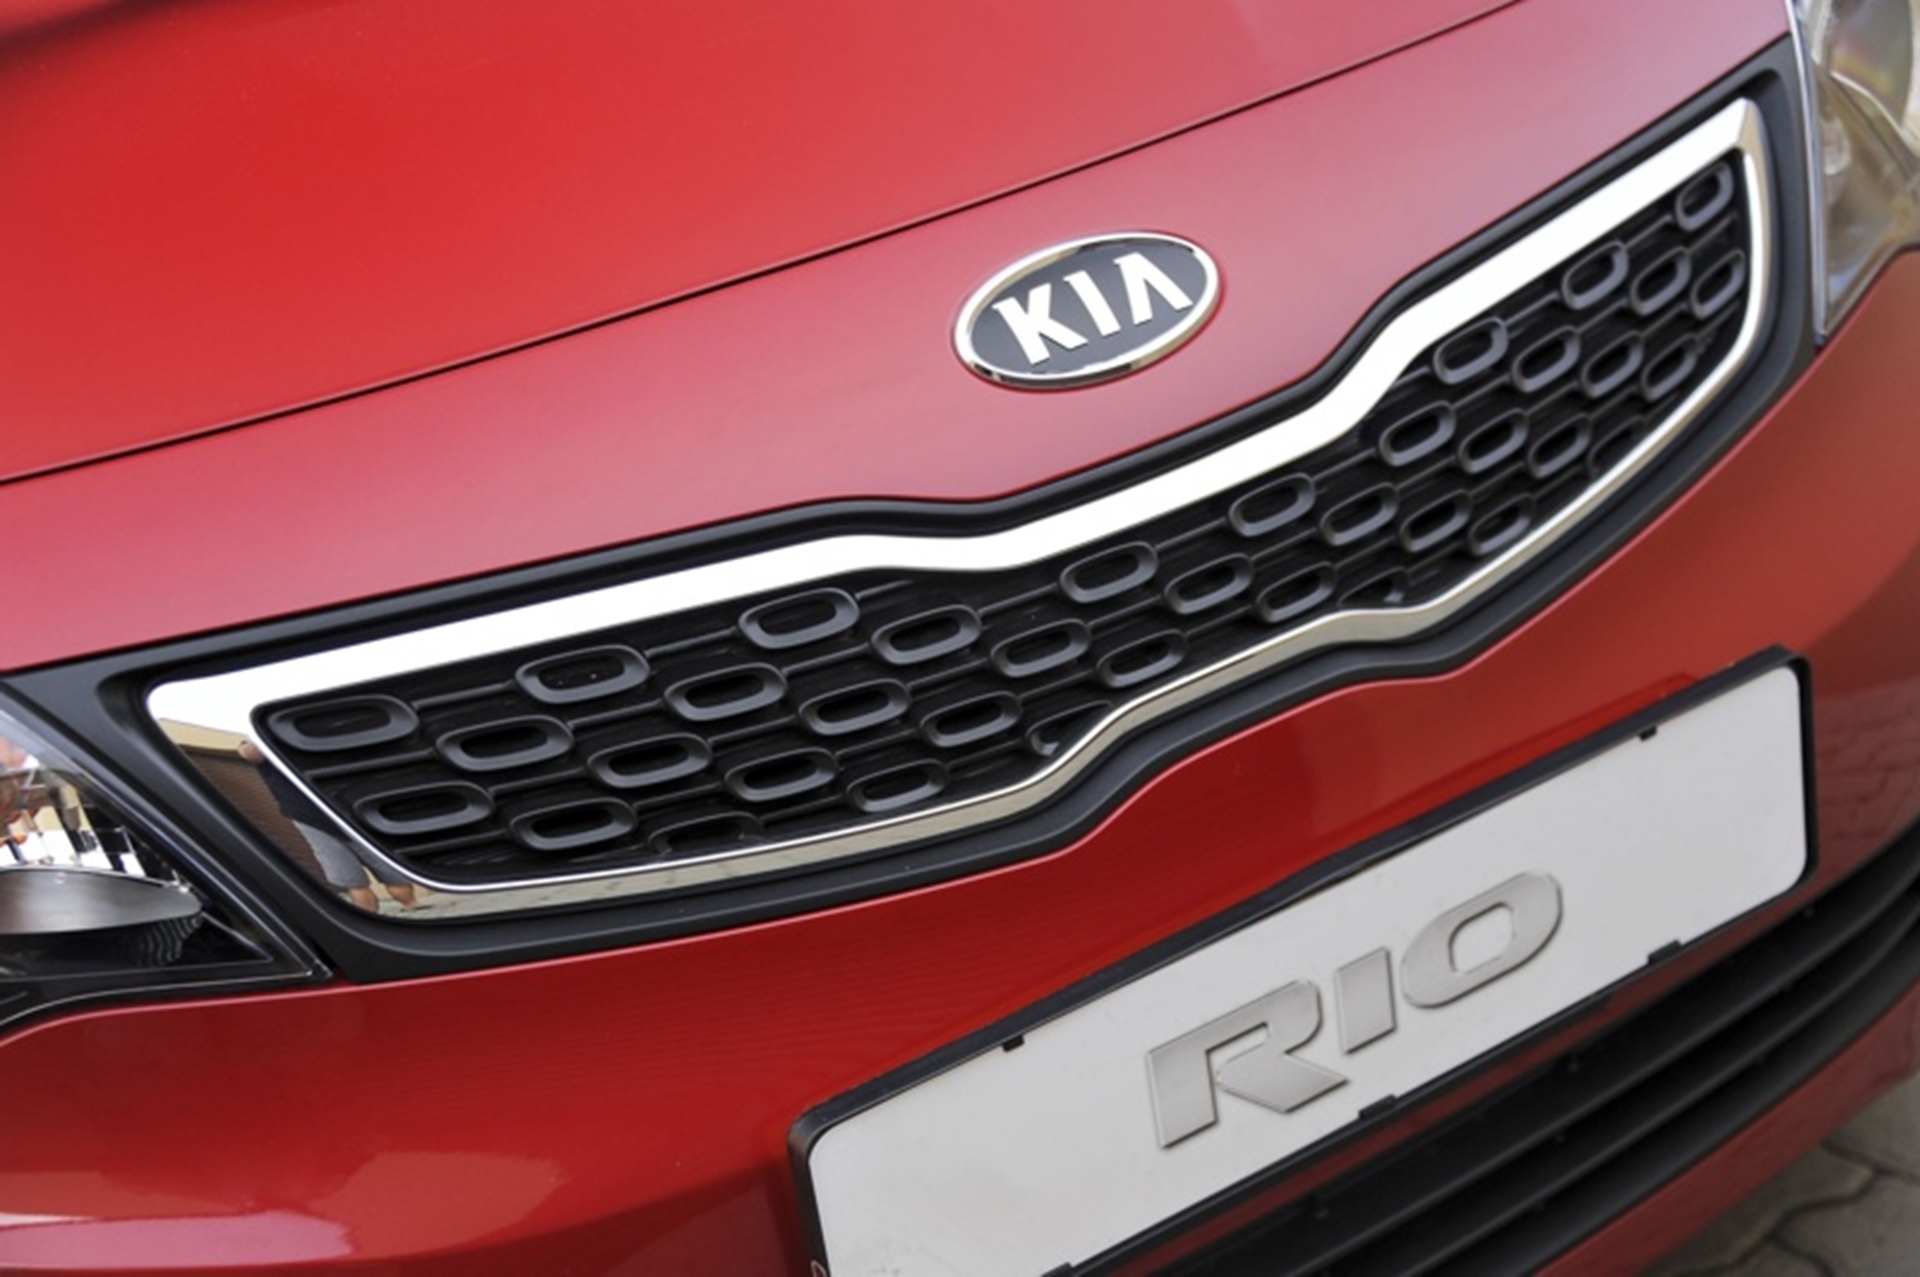 KIA Motors South Africa: KIA Suspension and Refinement